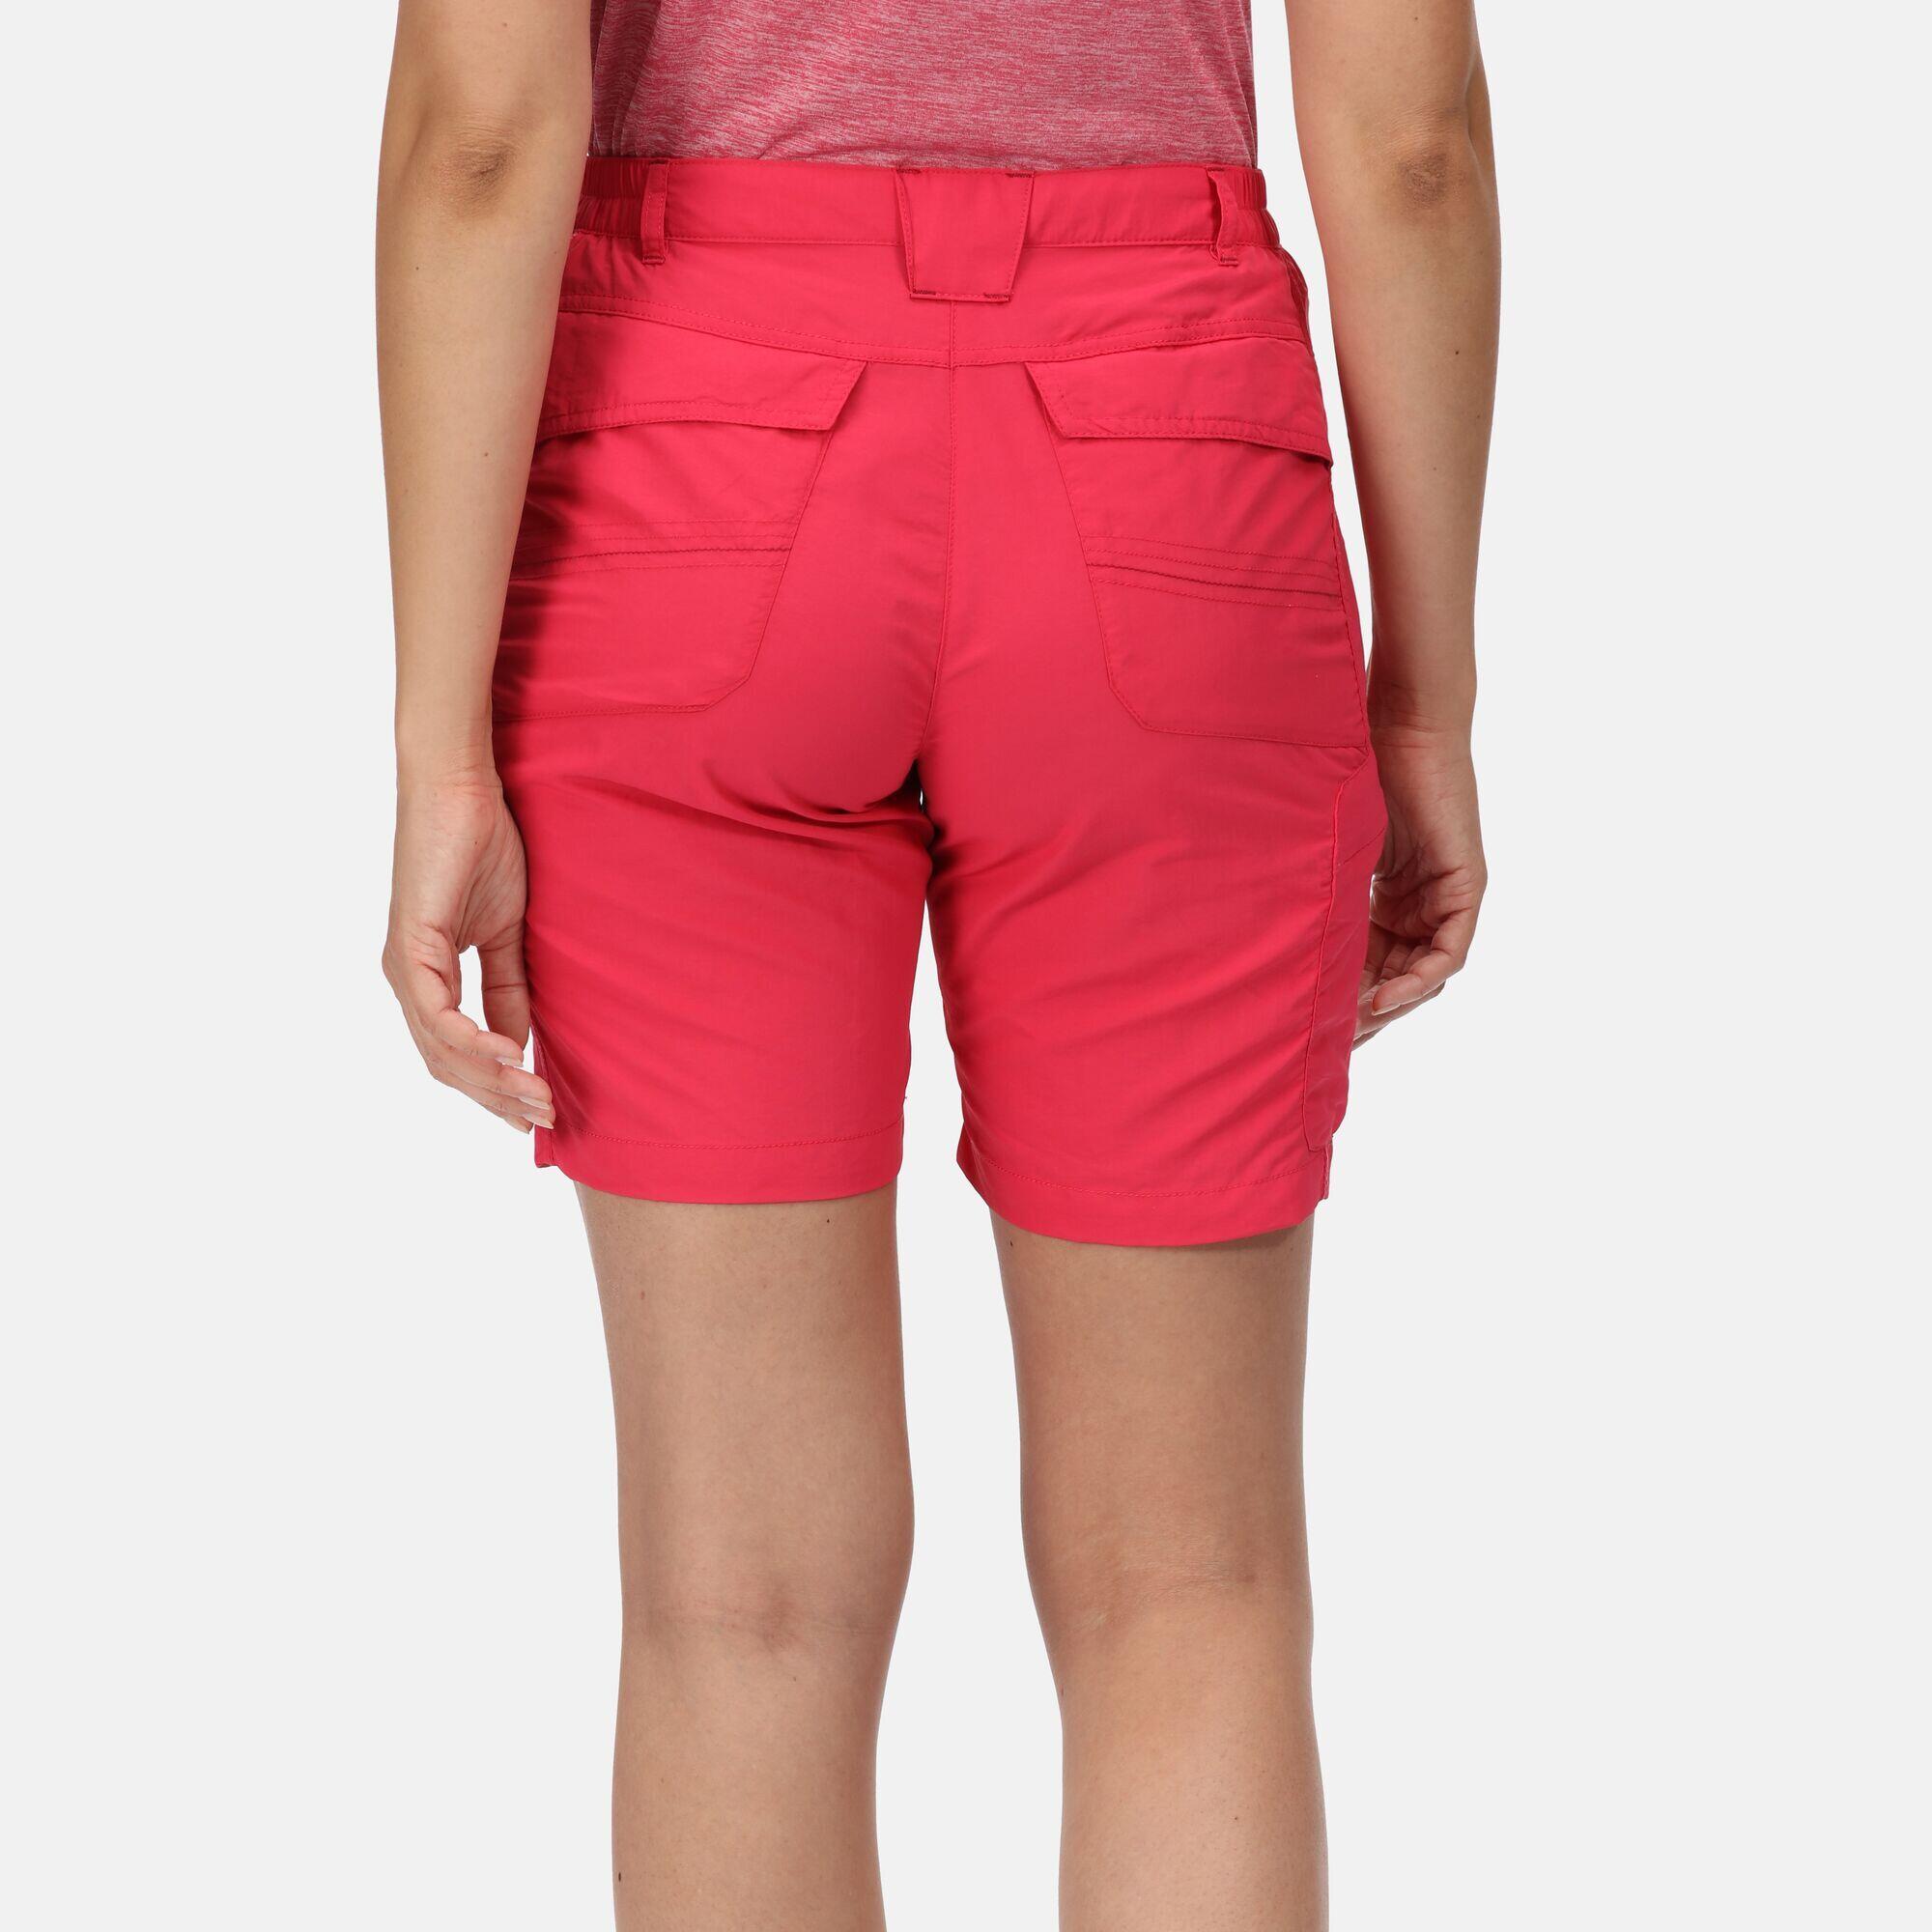 Chaska II Women's Hiking Shorts - Rethink Pink 6/6